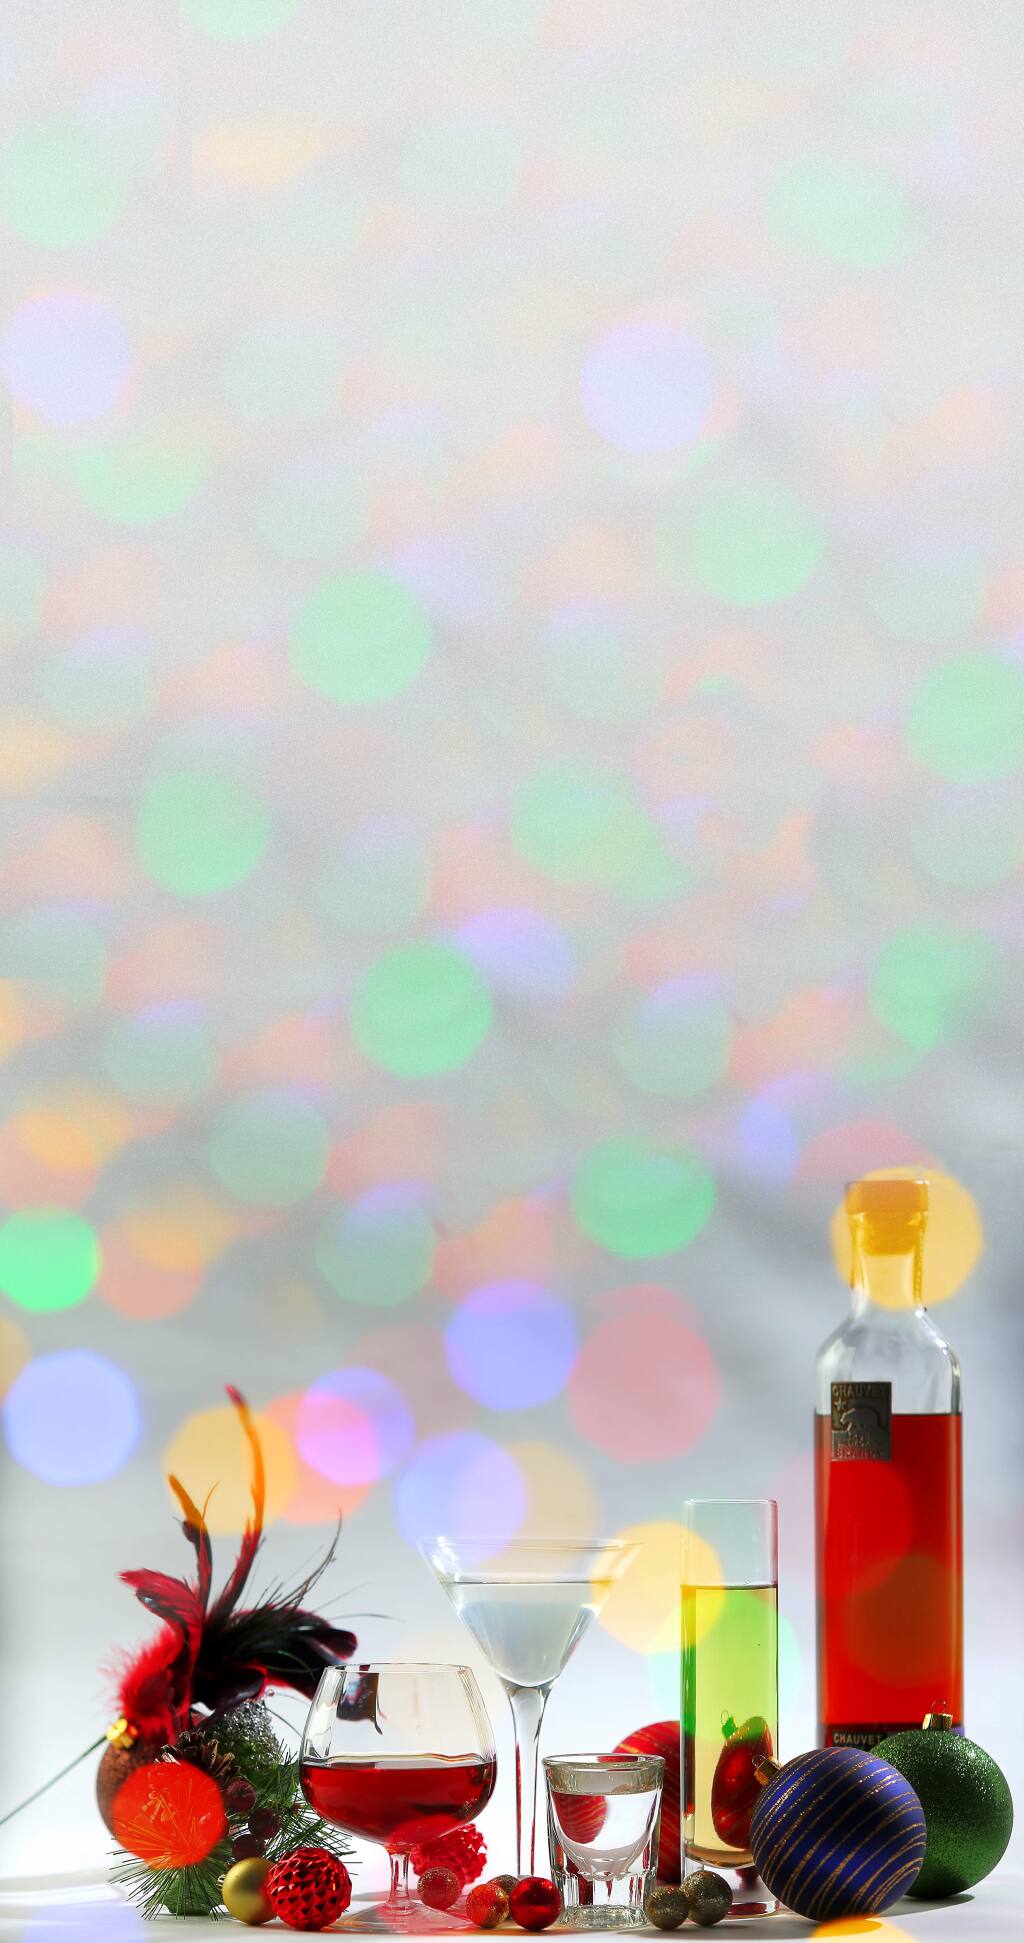 Holiday spirits include brandy, lemoncello, vodka, and grappa. (Christopher Chung/ The Press Democrat)